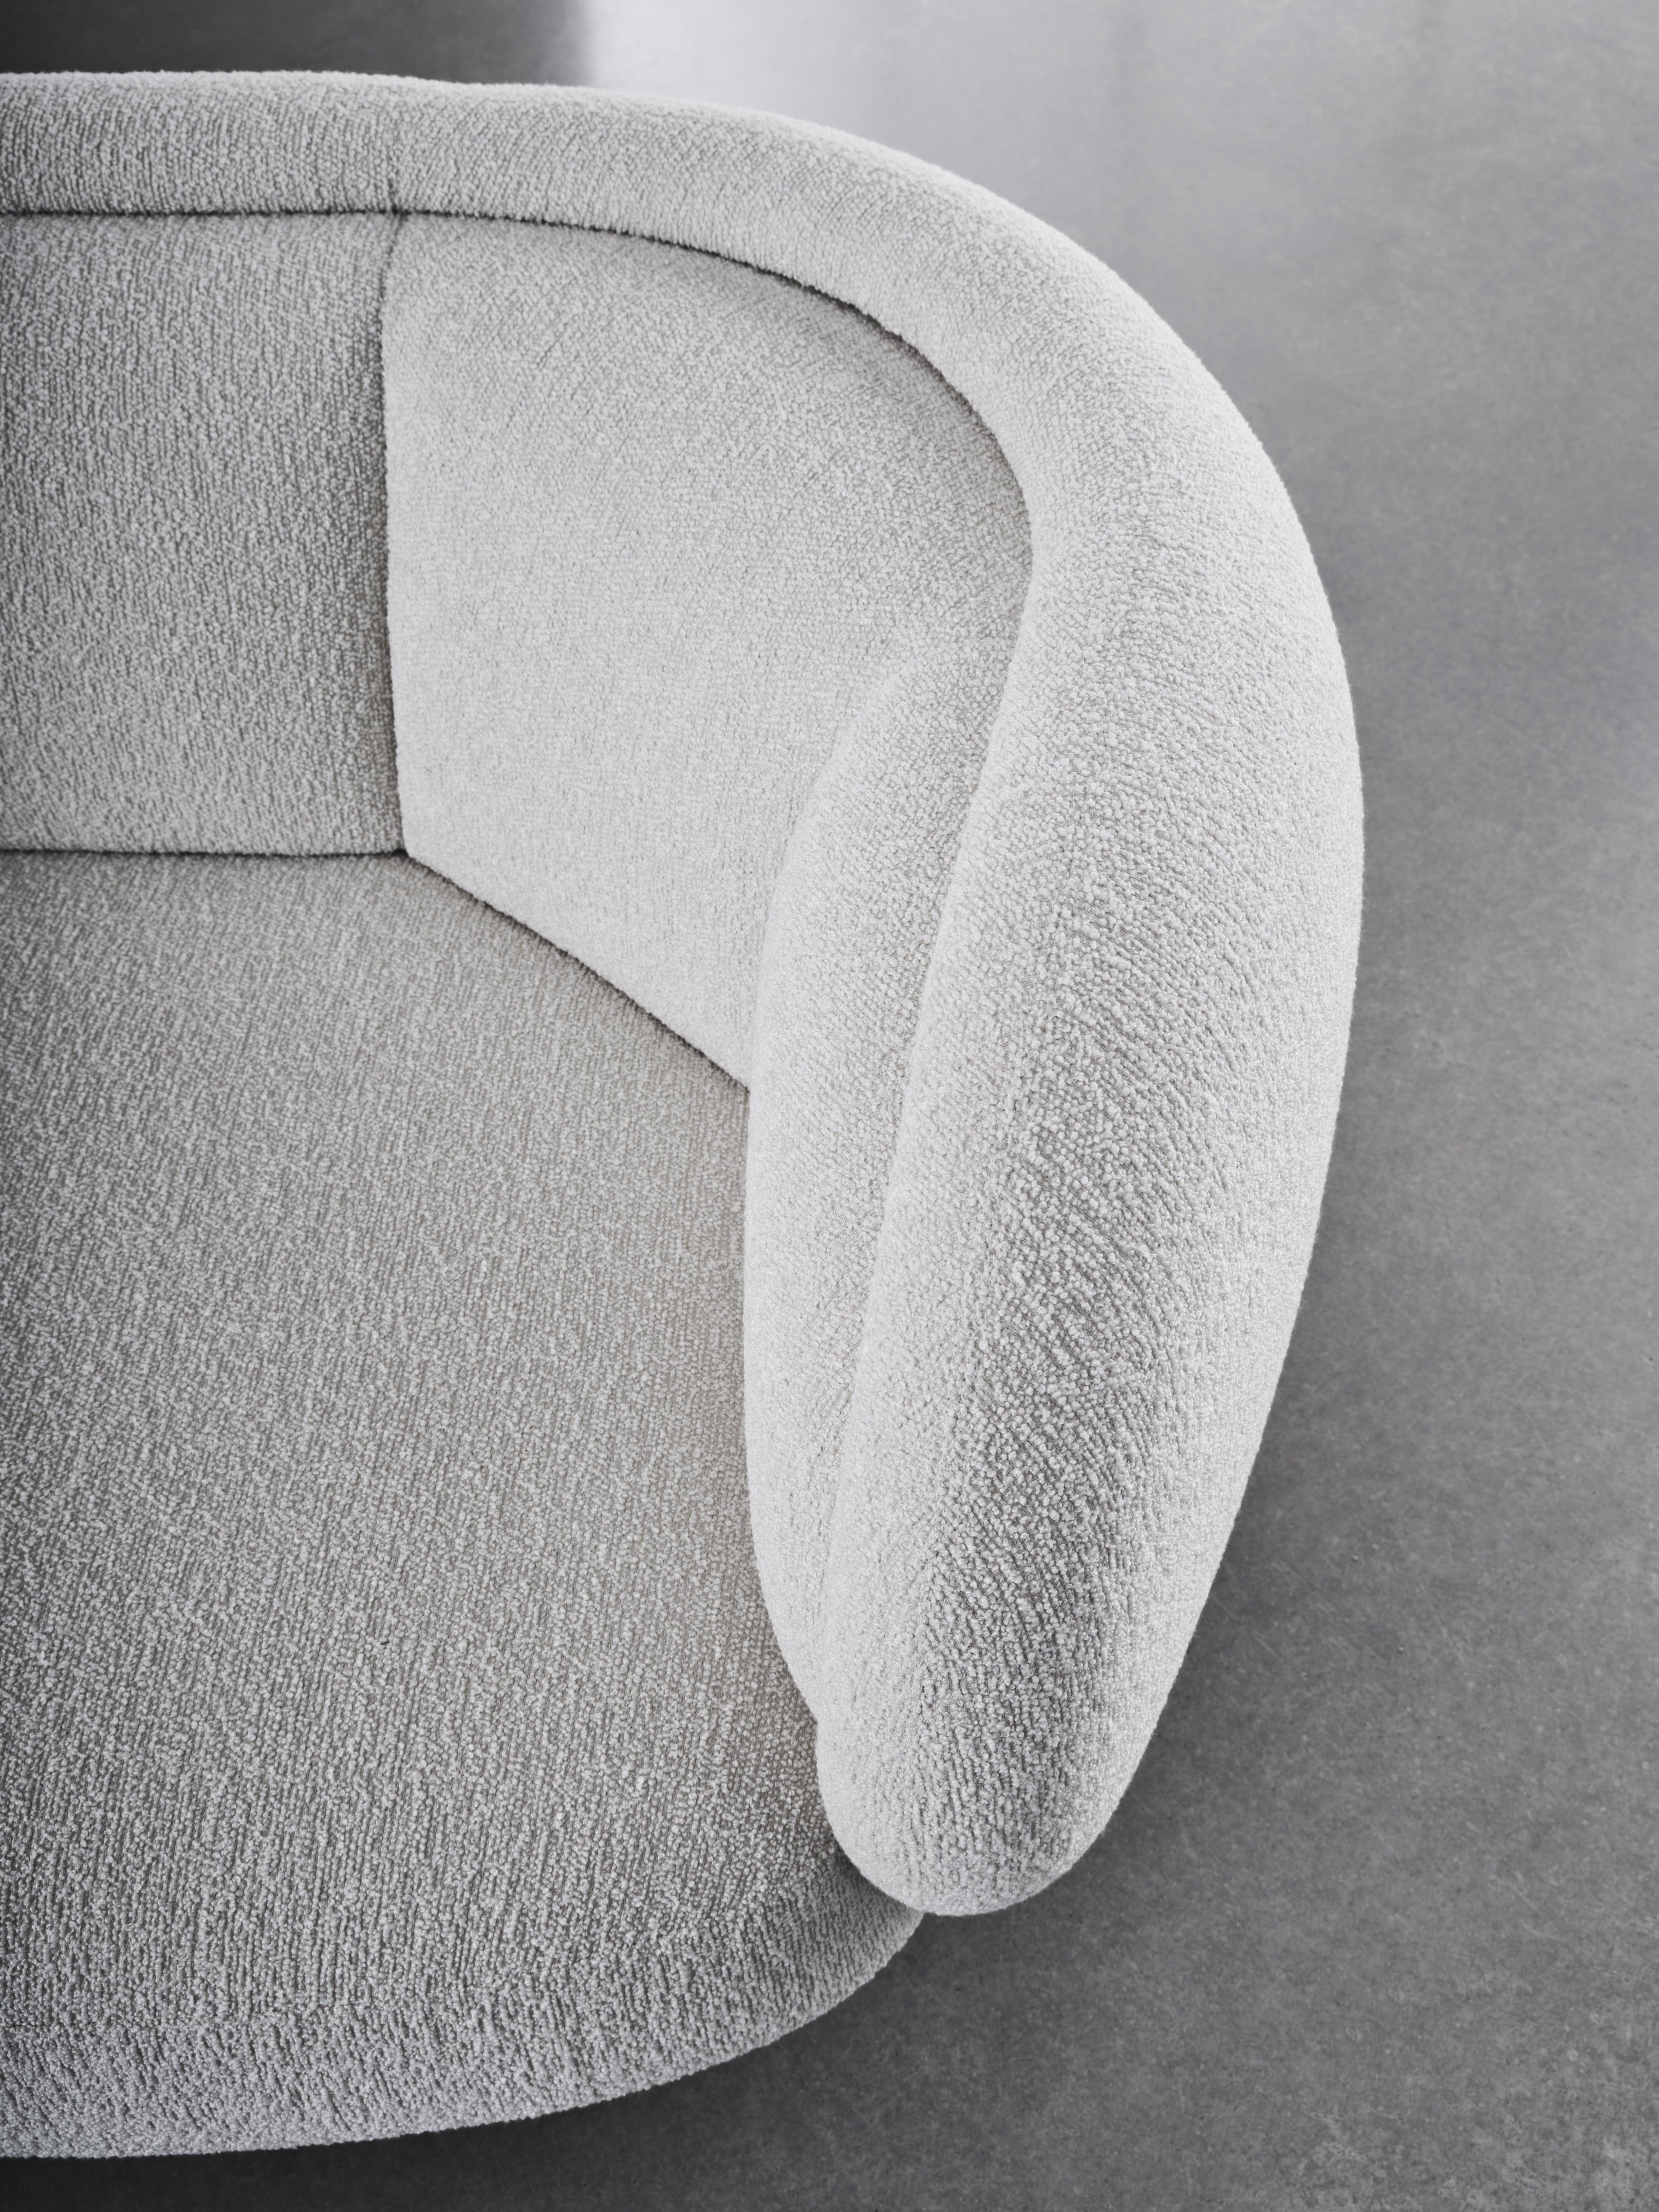 Contemporary Customizable Wittmann Vuelta Modular Sofa by Jaime Hayon For Sale